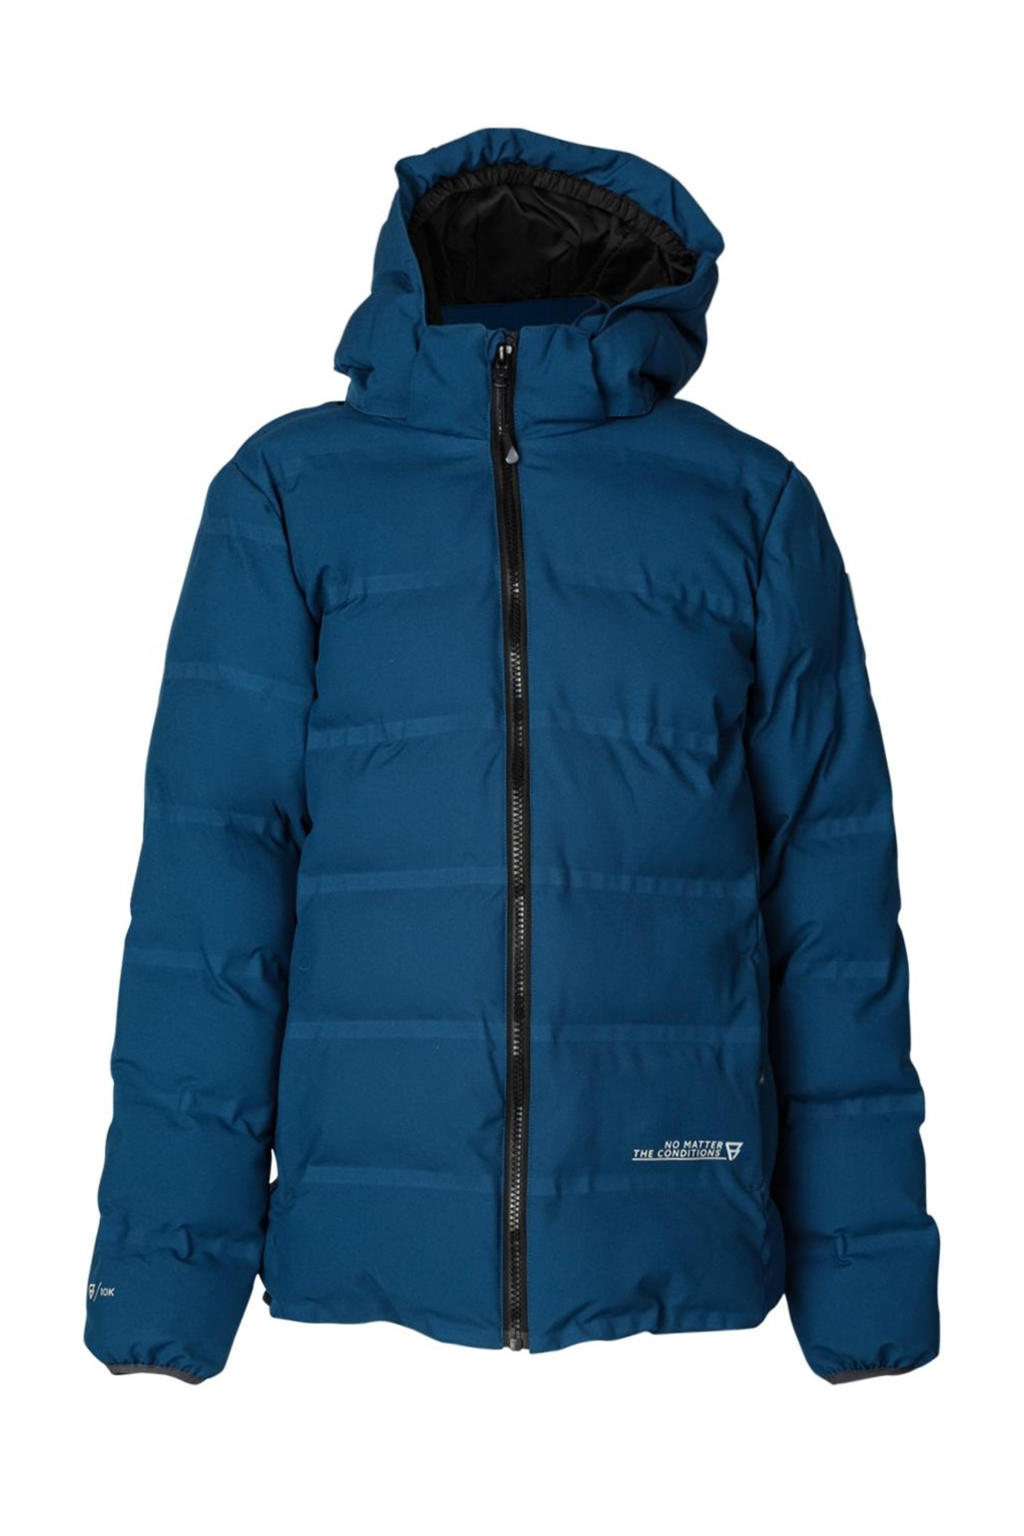 Brunotti gewatteerde outdoor jas Galany donkerblauw